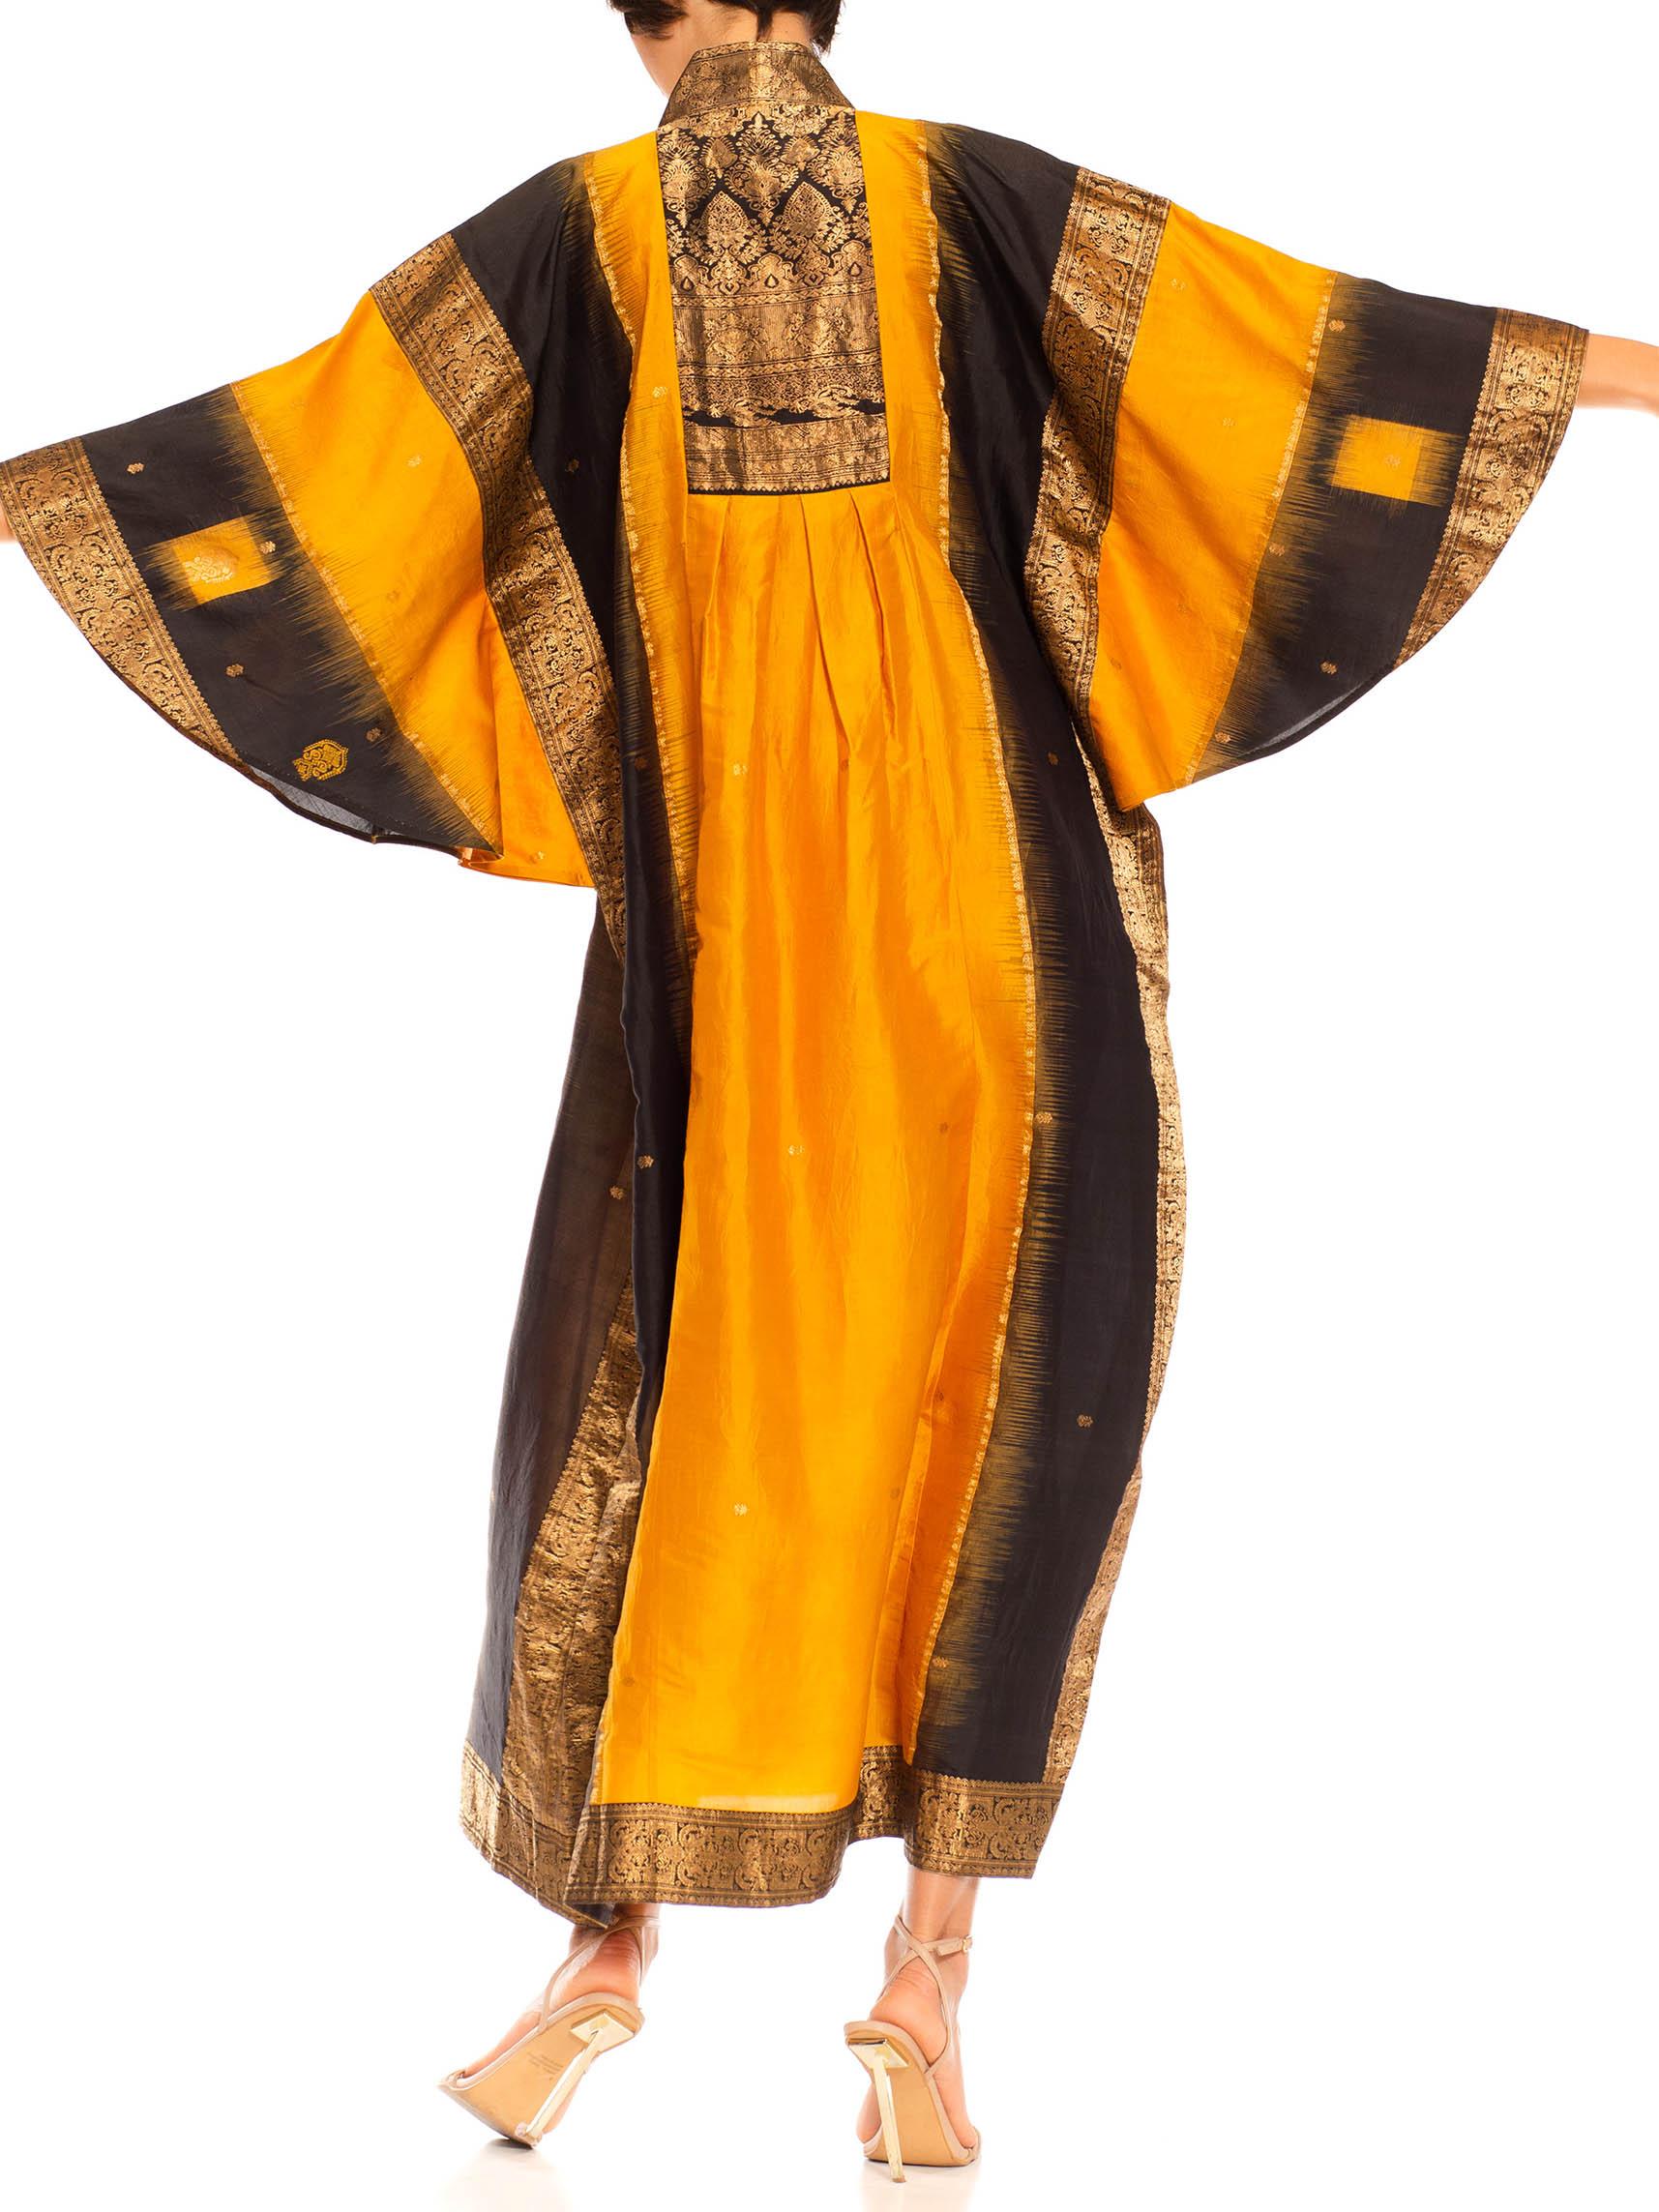 Women's Morphew Collection Saffron, Black & Gold Silk Kaftan Made From Vintage Saris For Sale